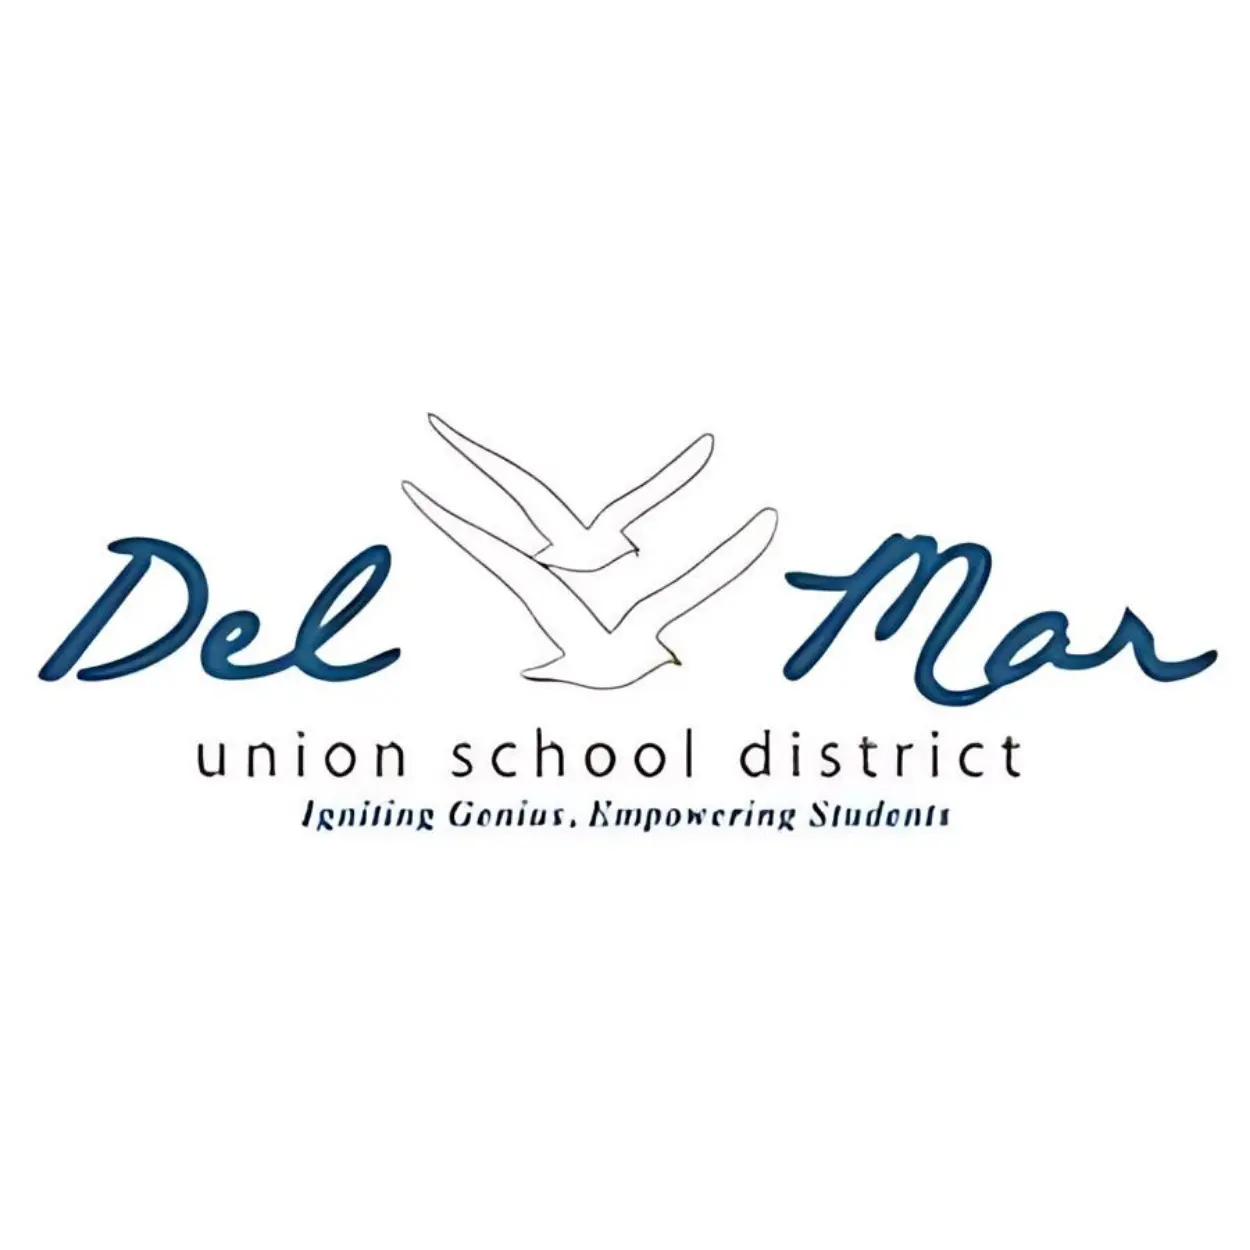 Del Mar Union School District, Igniting Genius, Empowering Students